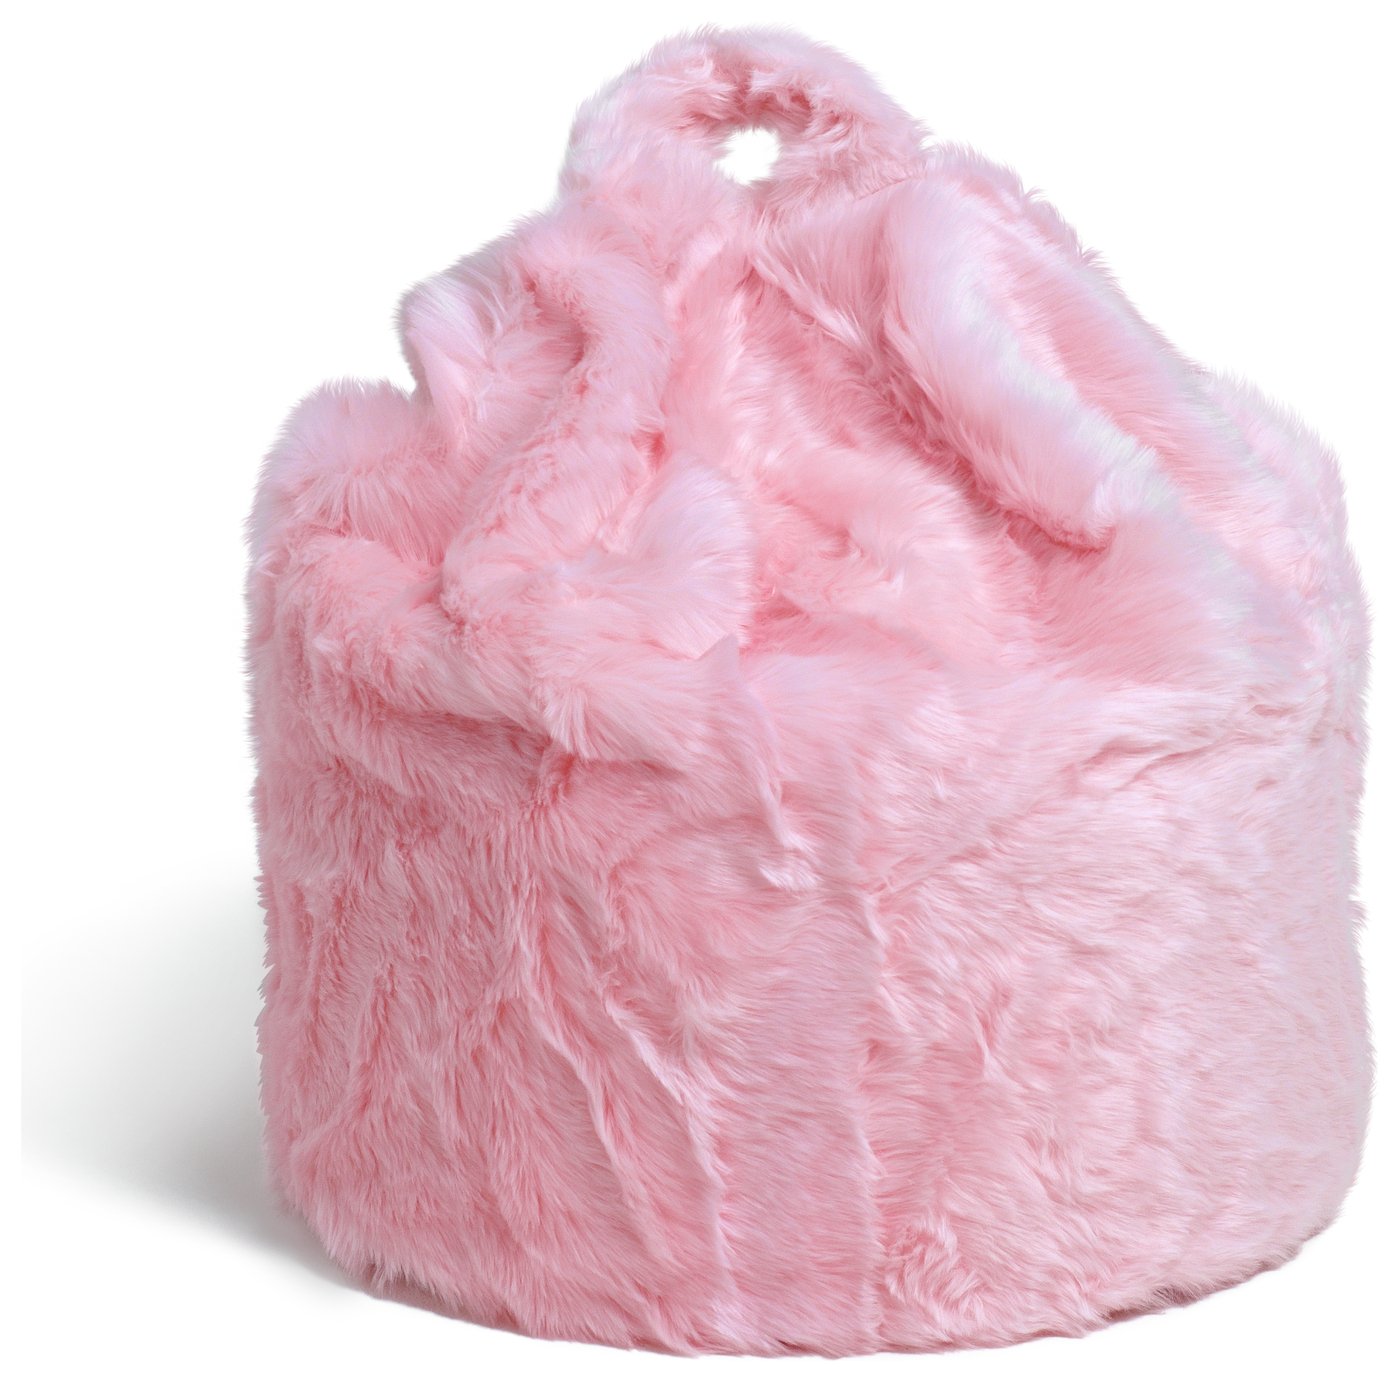 Argos Home Faux Fur Pink Fluffy Bean Bag Review